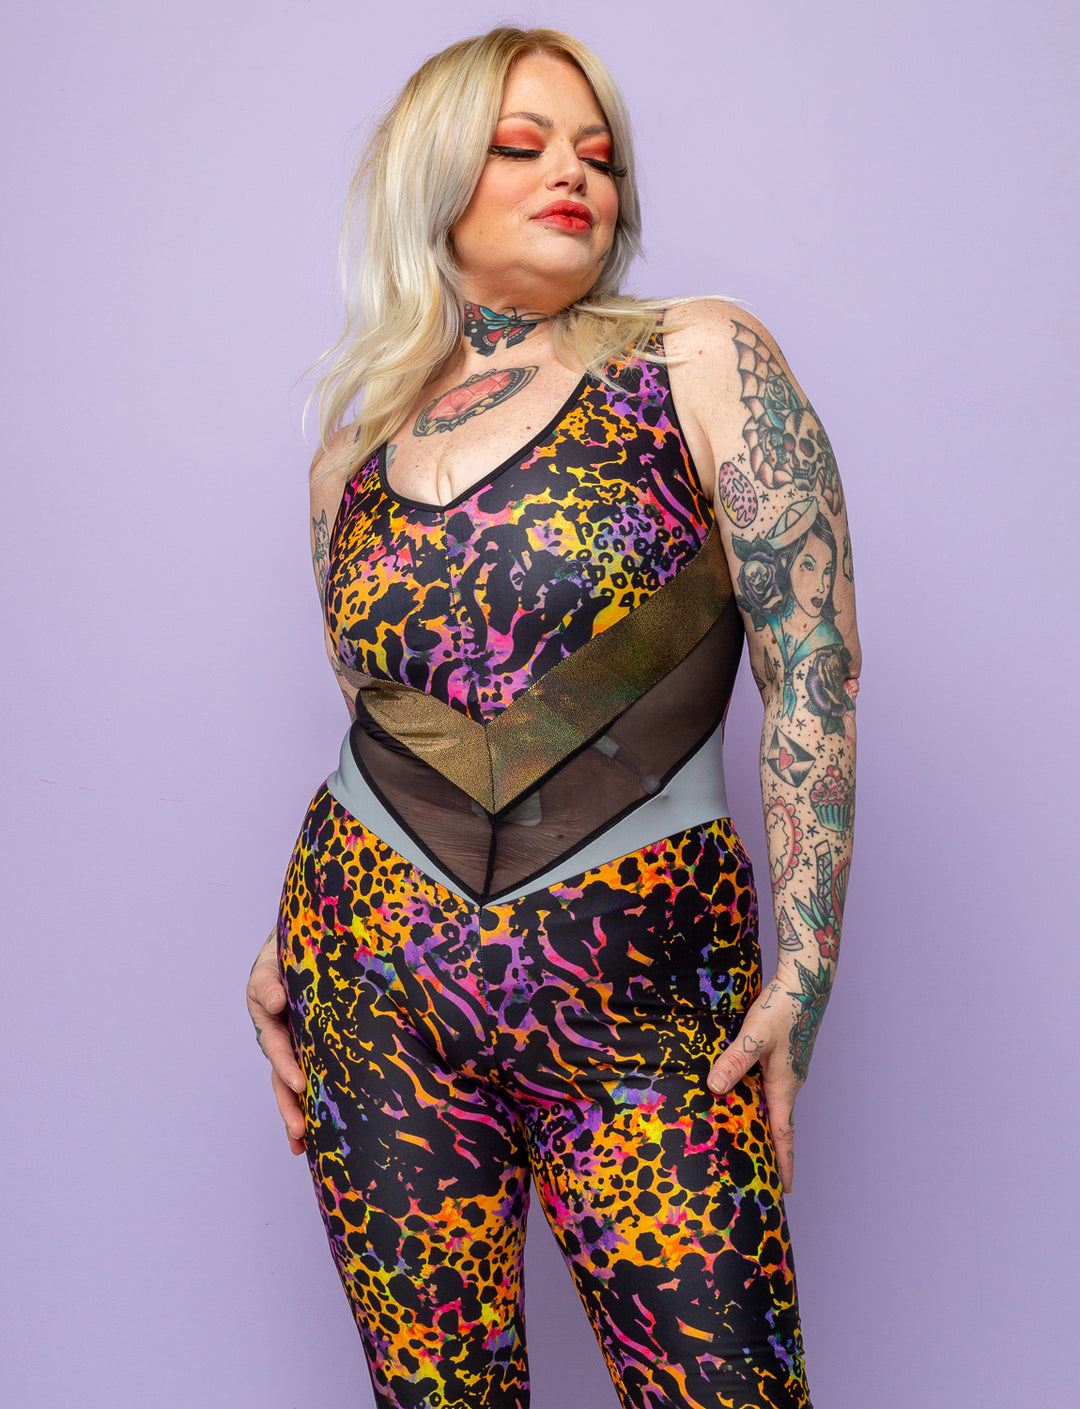 Woman modelling a purple leopard print lycra catsuit.